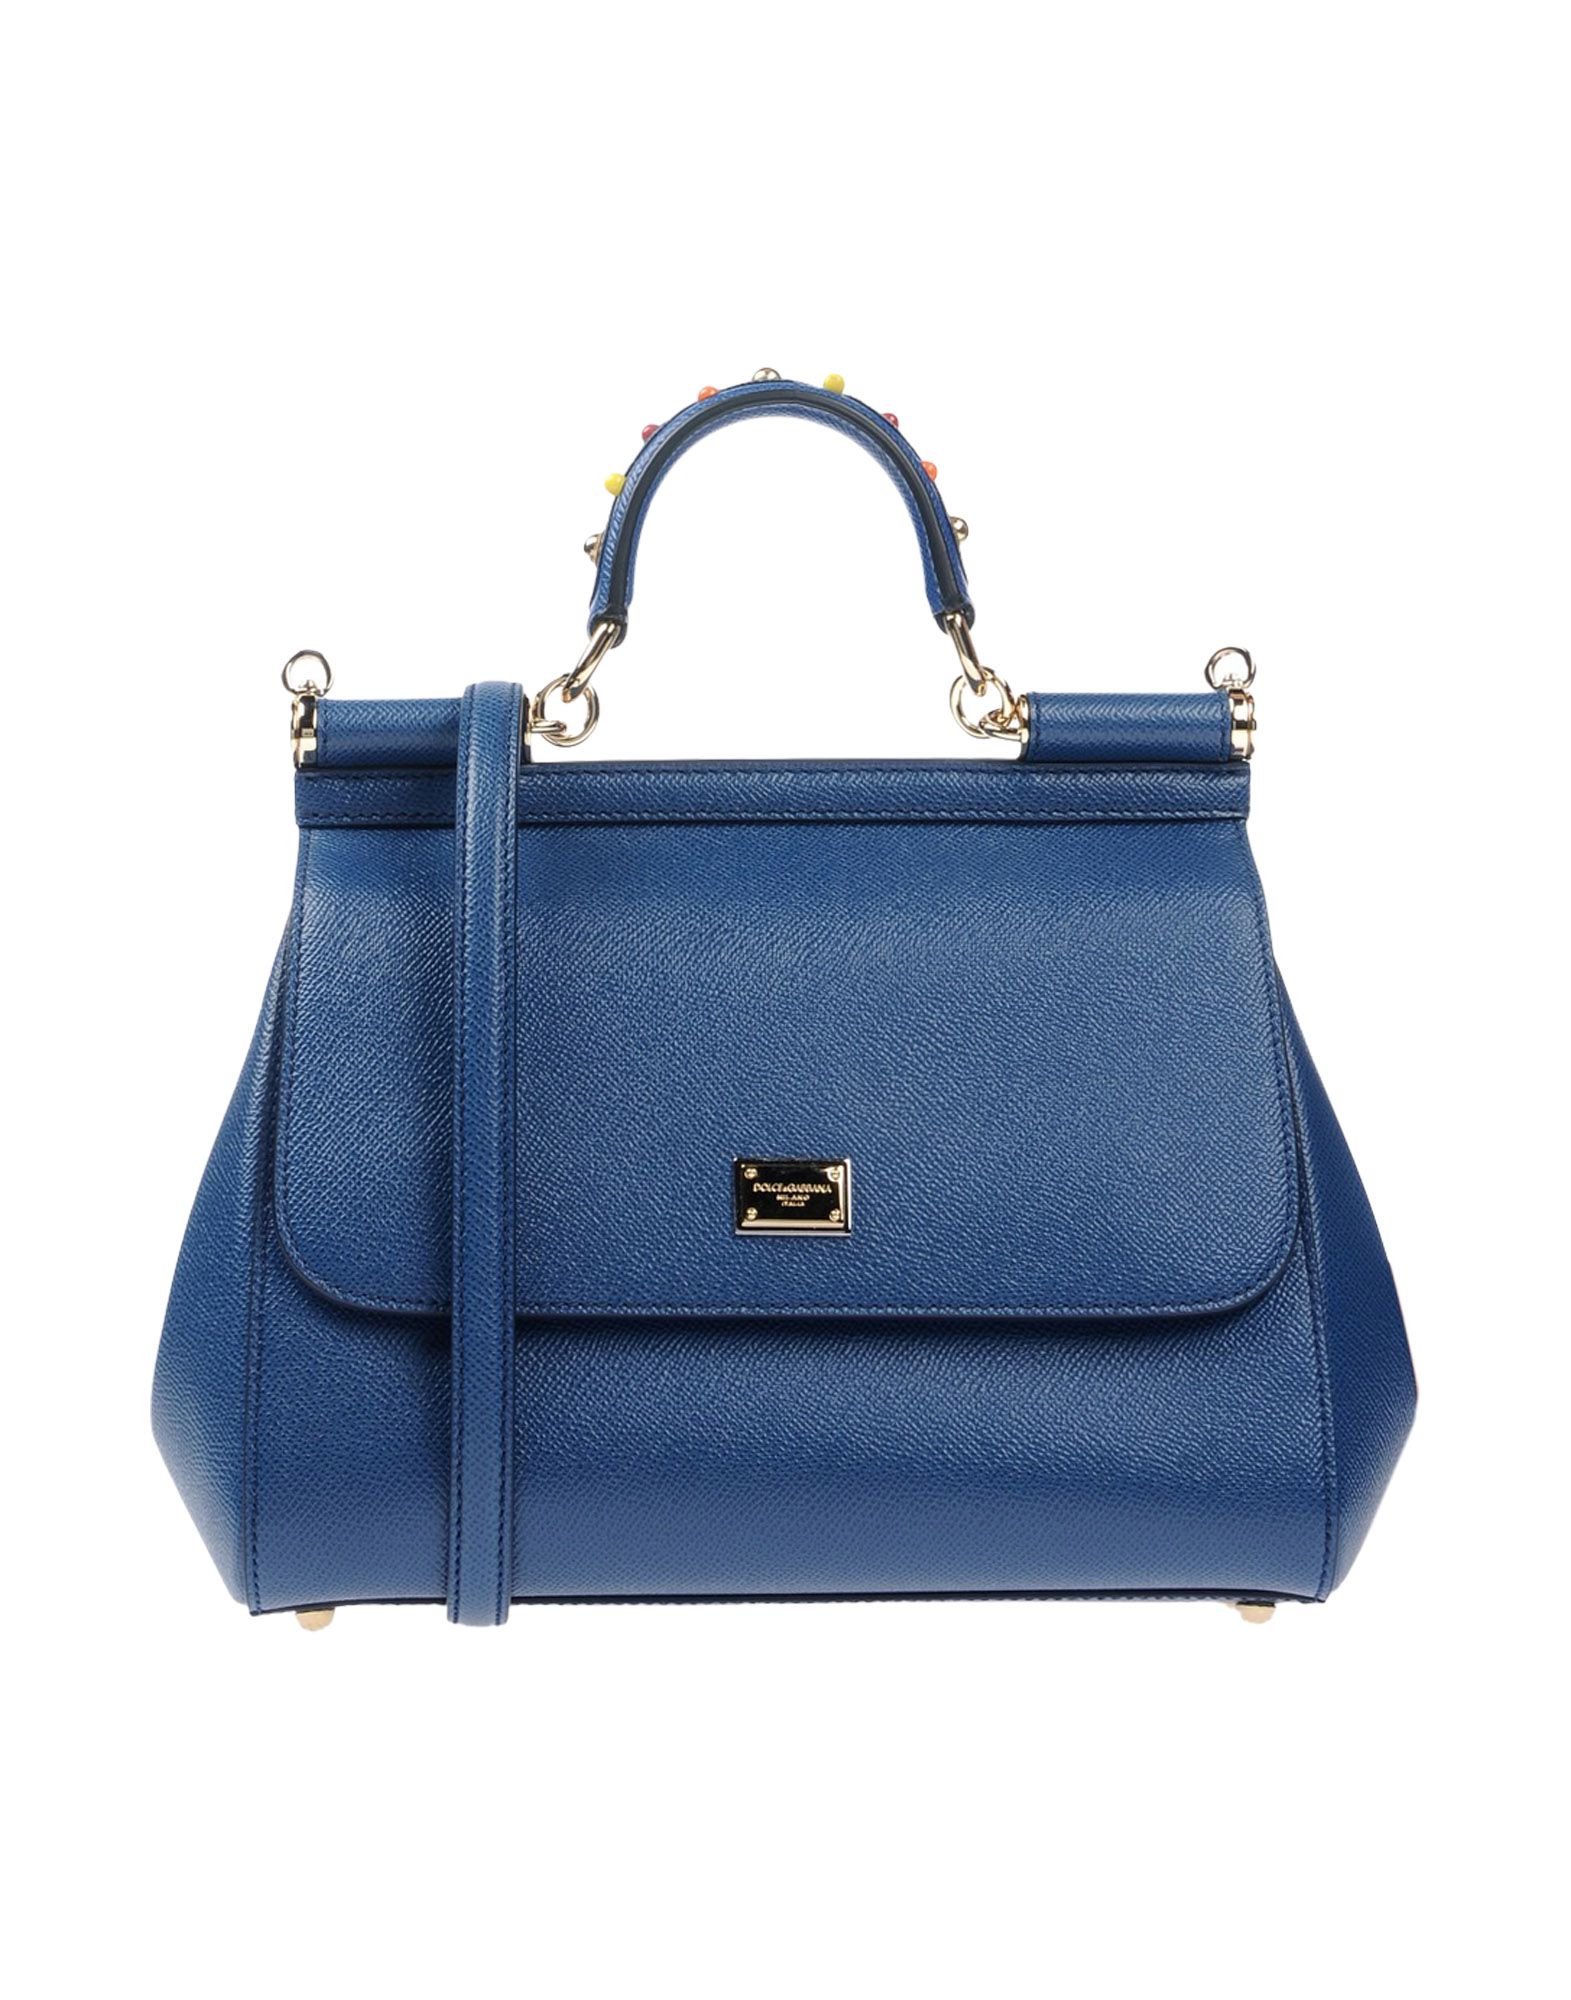 DOLCE & GABBANA Handbags - Item 45414269